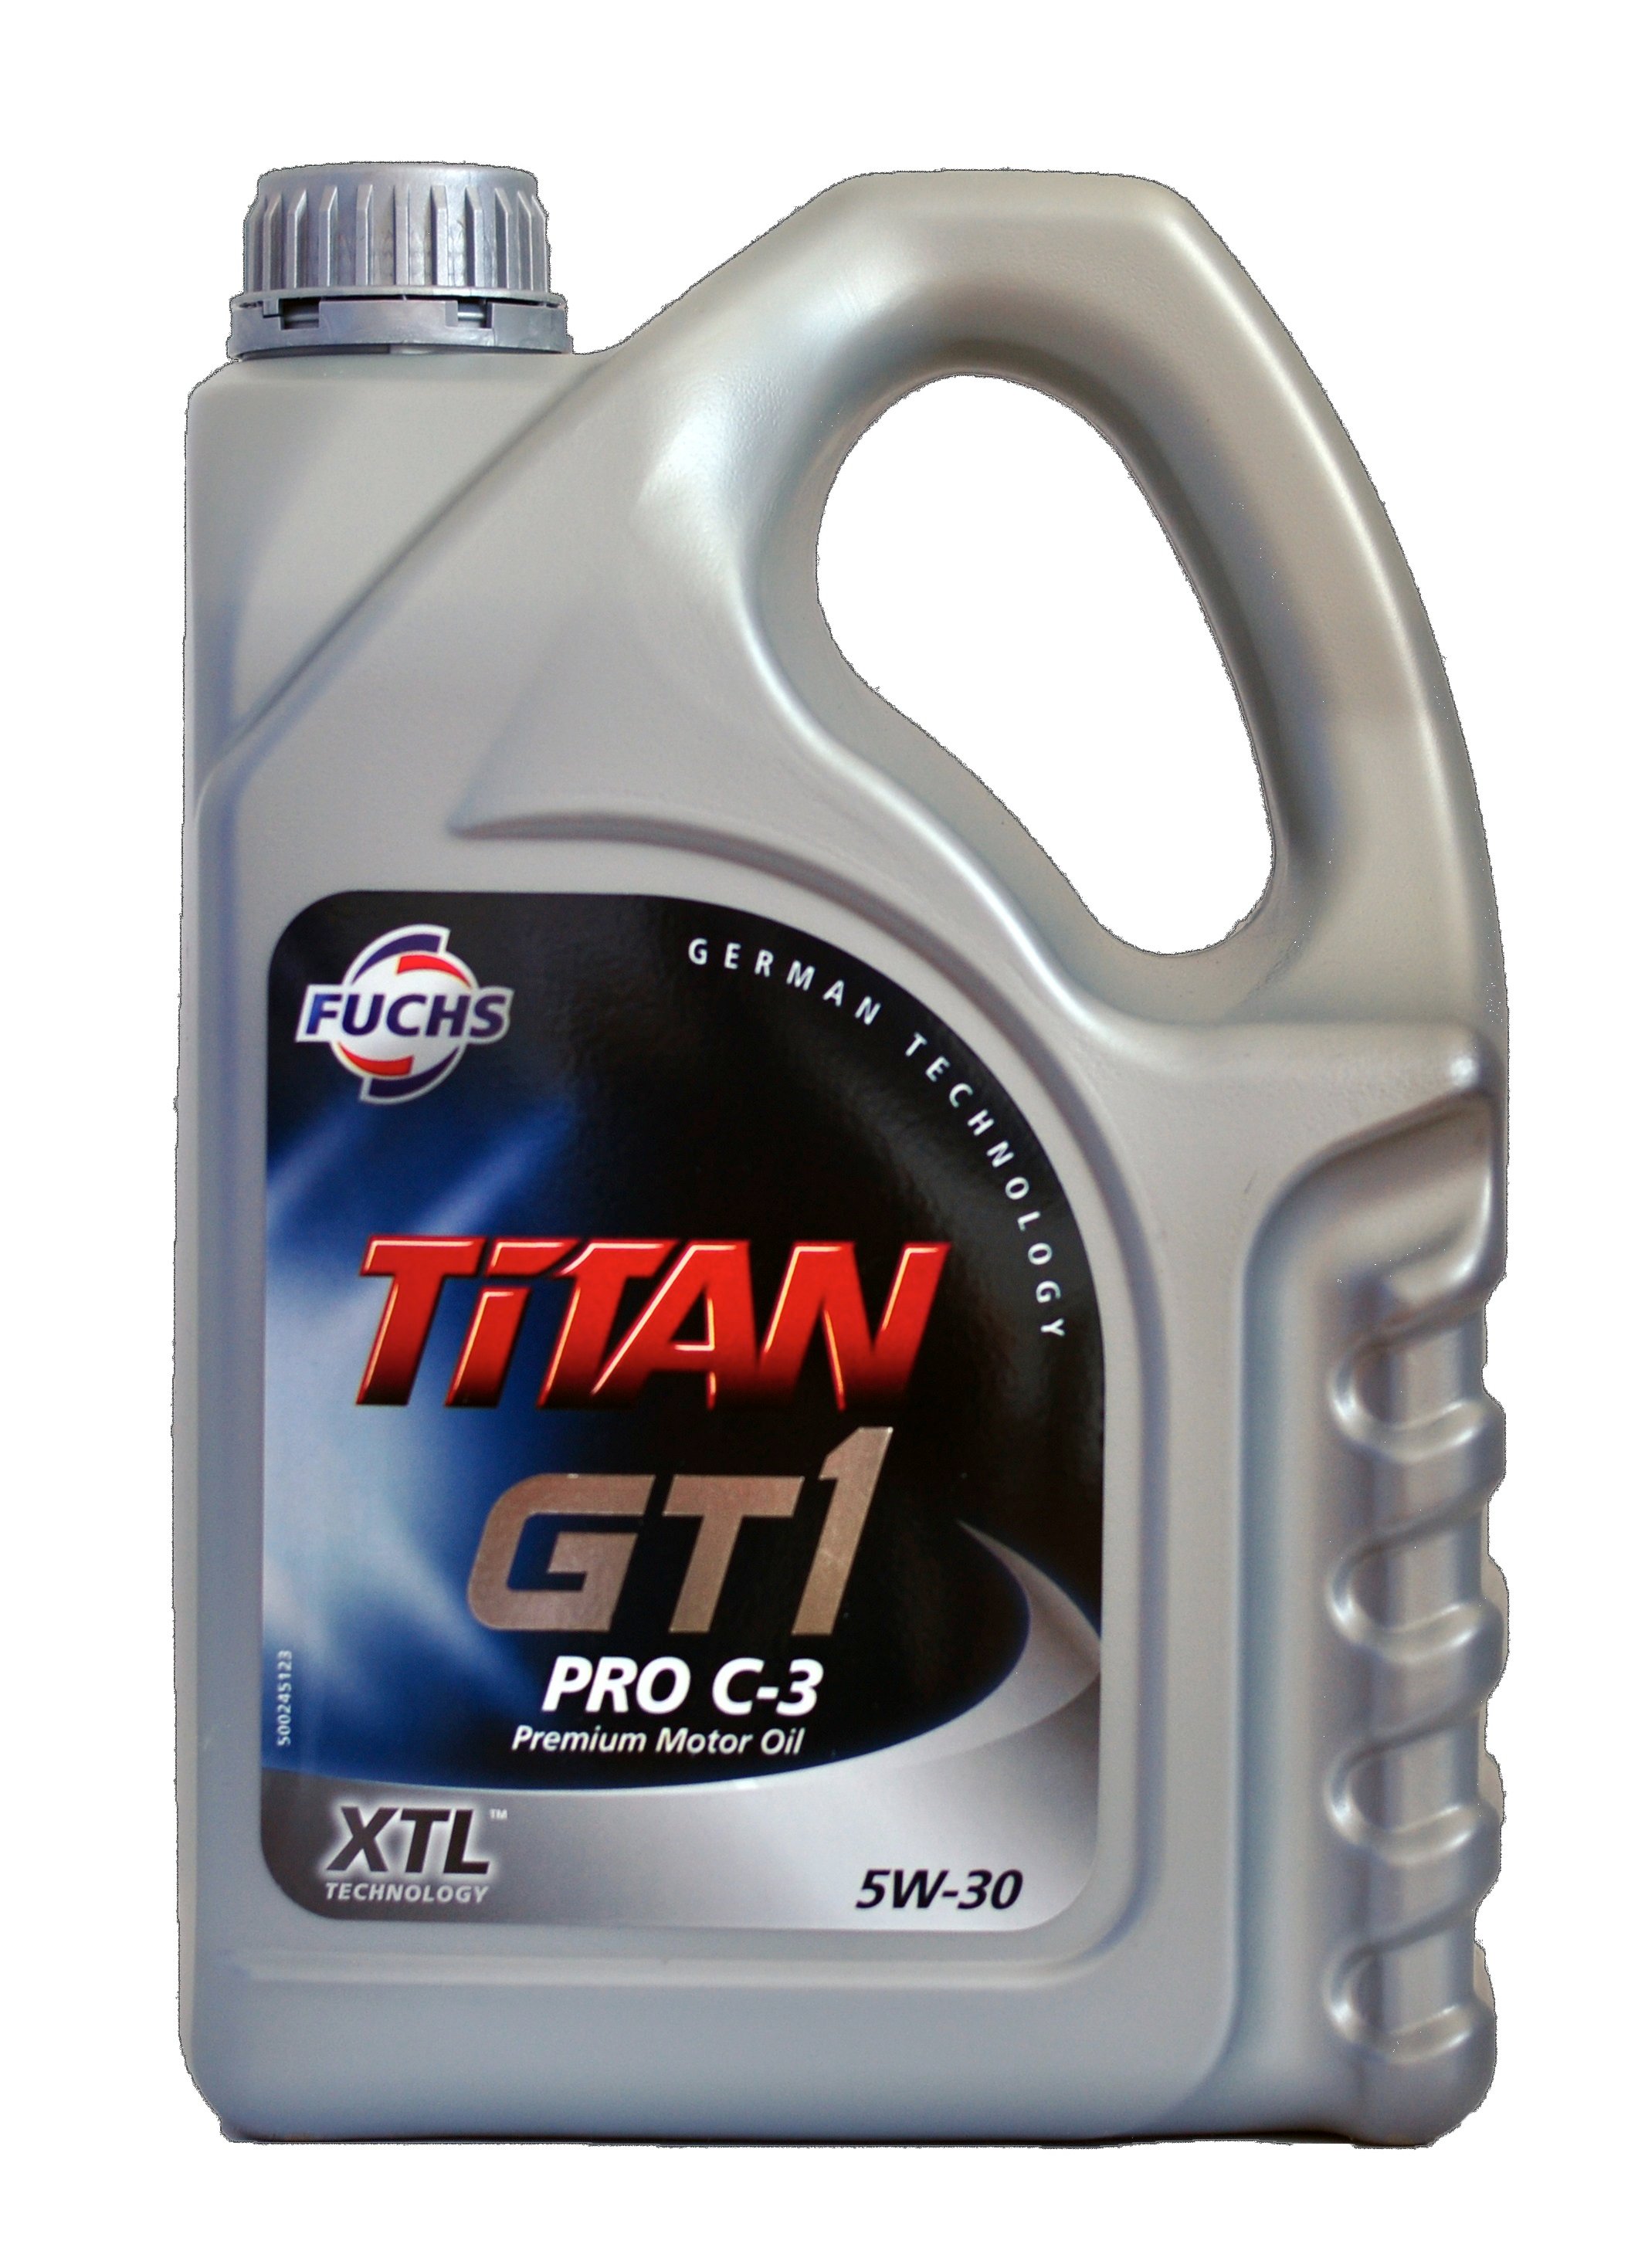 Купить масло титан 5w30. Fuchs Titan gt1 Flex 23 5w-30 синтетическое 4 л. Fuchs Titan gt1. Titan gt1 Pro c-3 SAE 5w-30. Масло Фукс Титан 5w30.